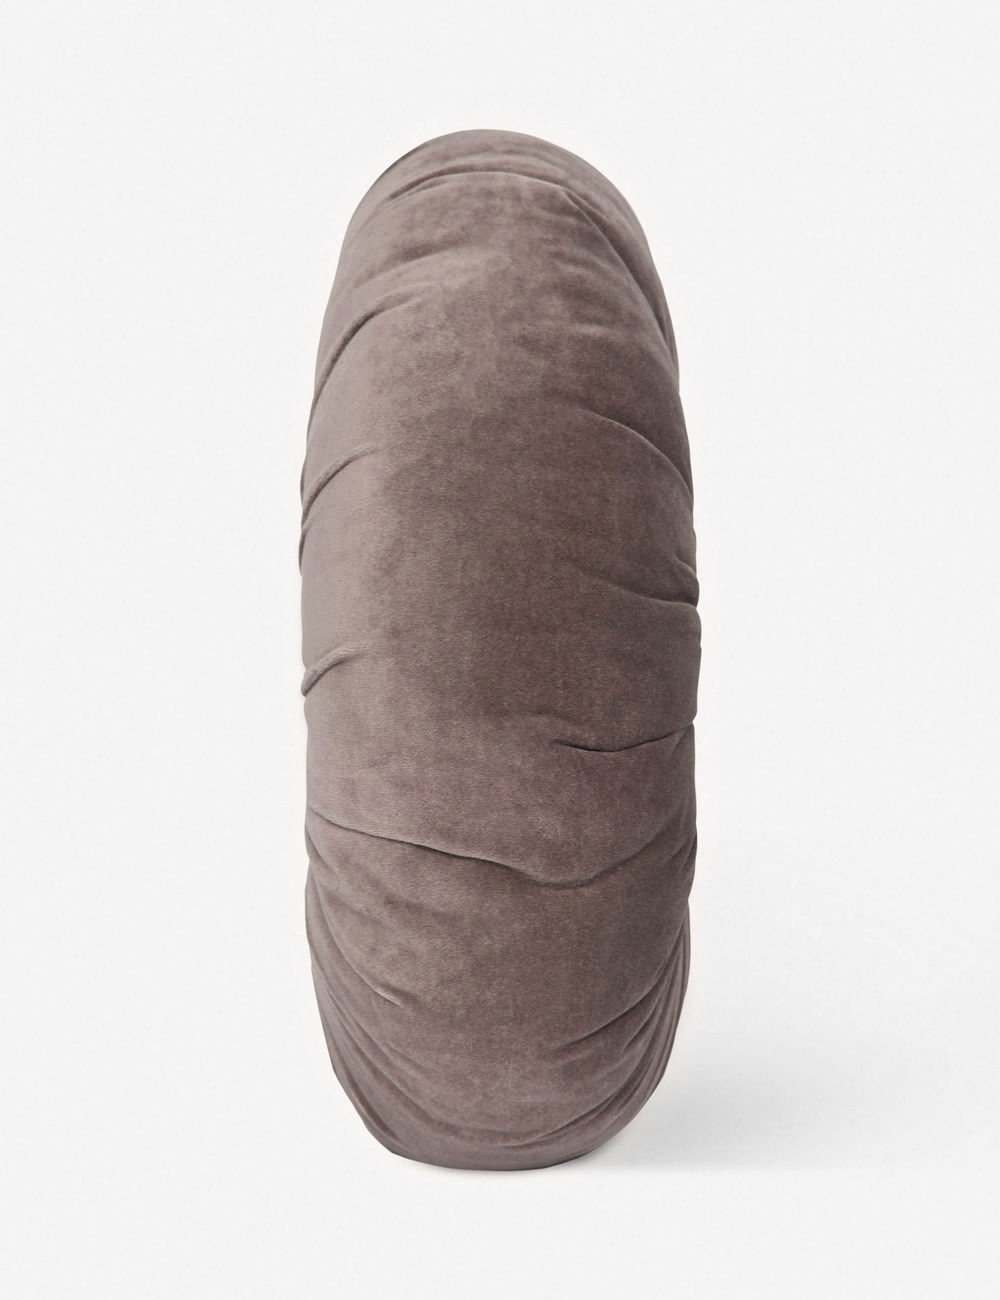 Monroe Velvet Round Pillow, Warm Gray - Image 1